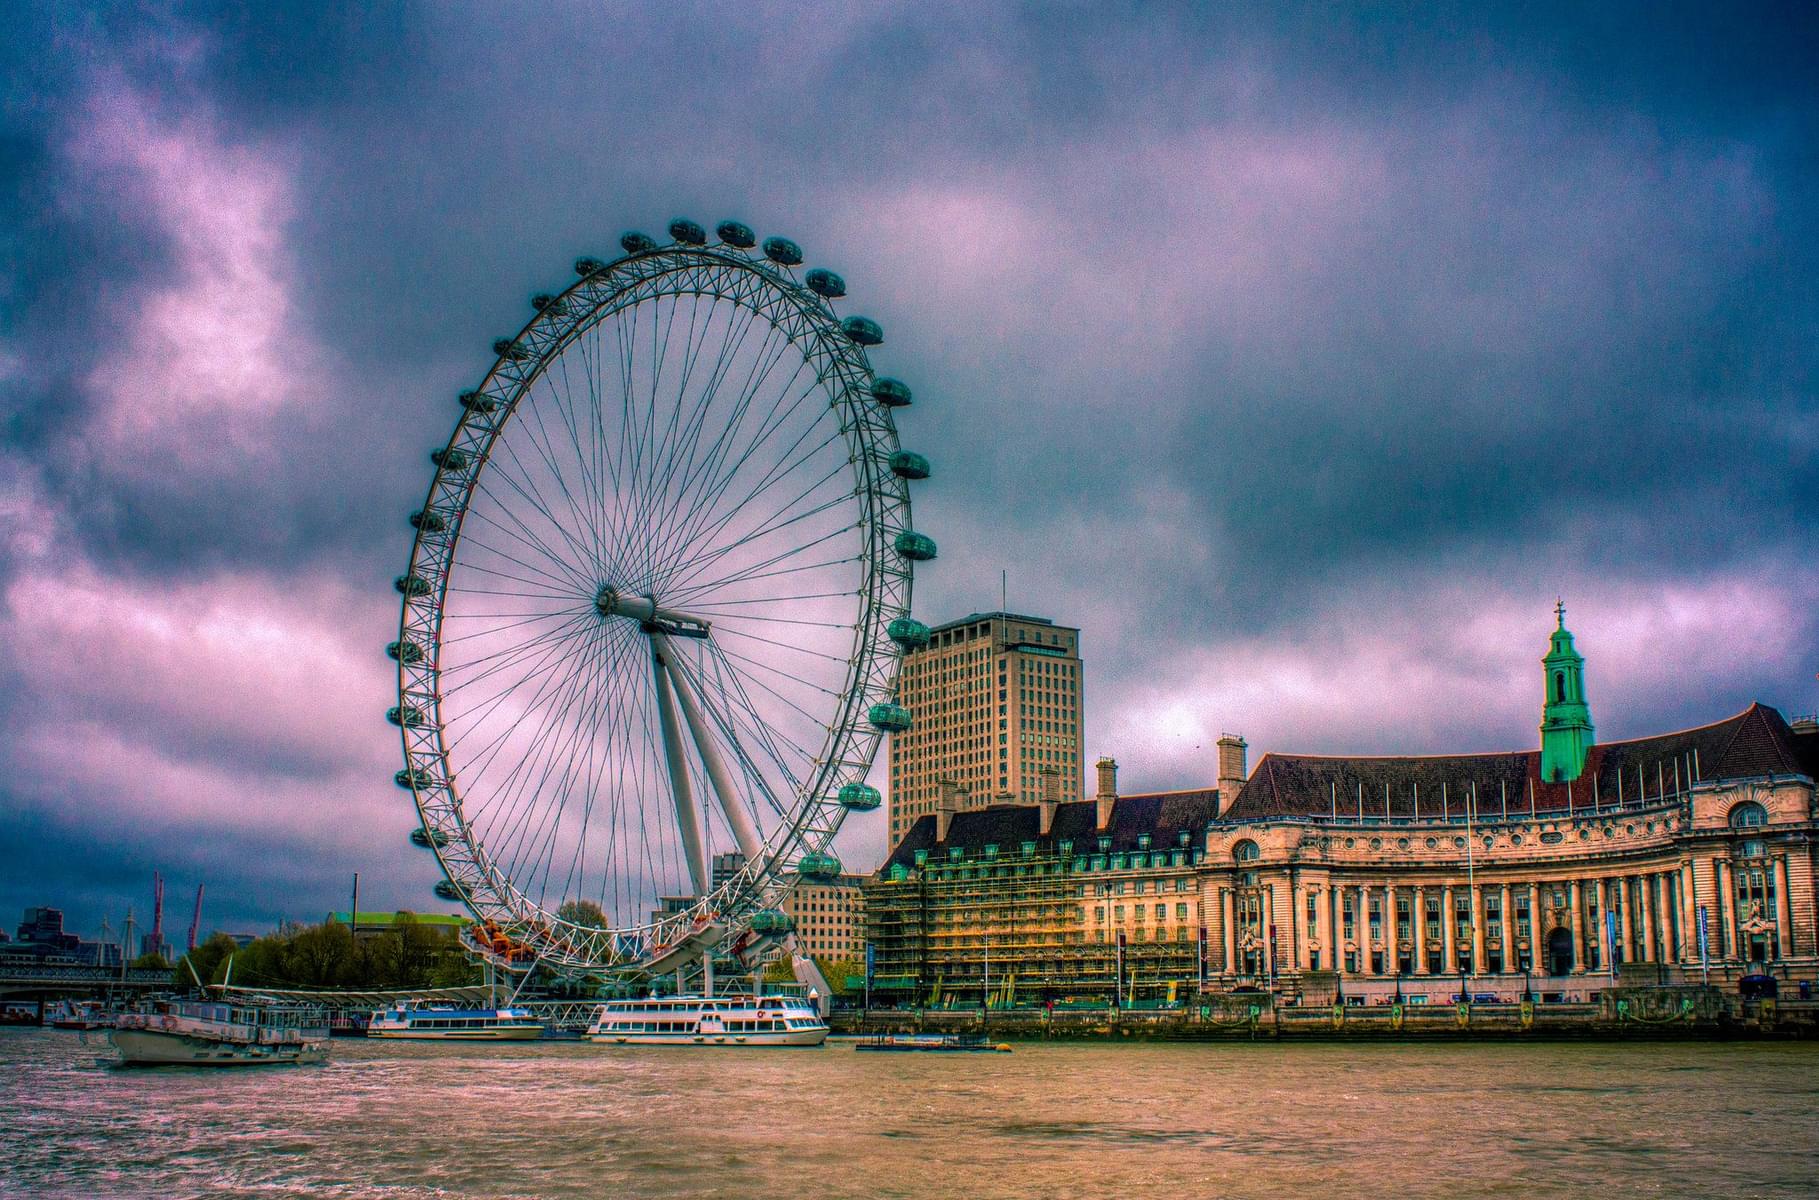 Enjoy Views From The London Eye